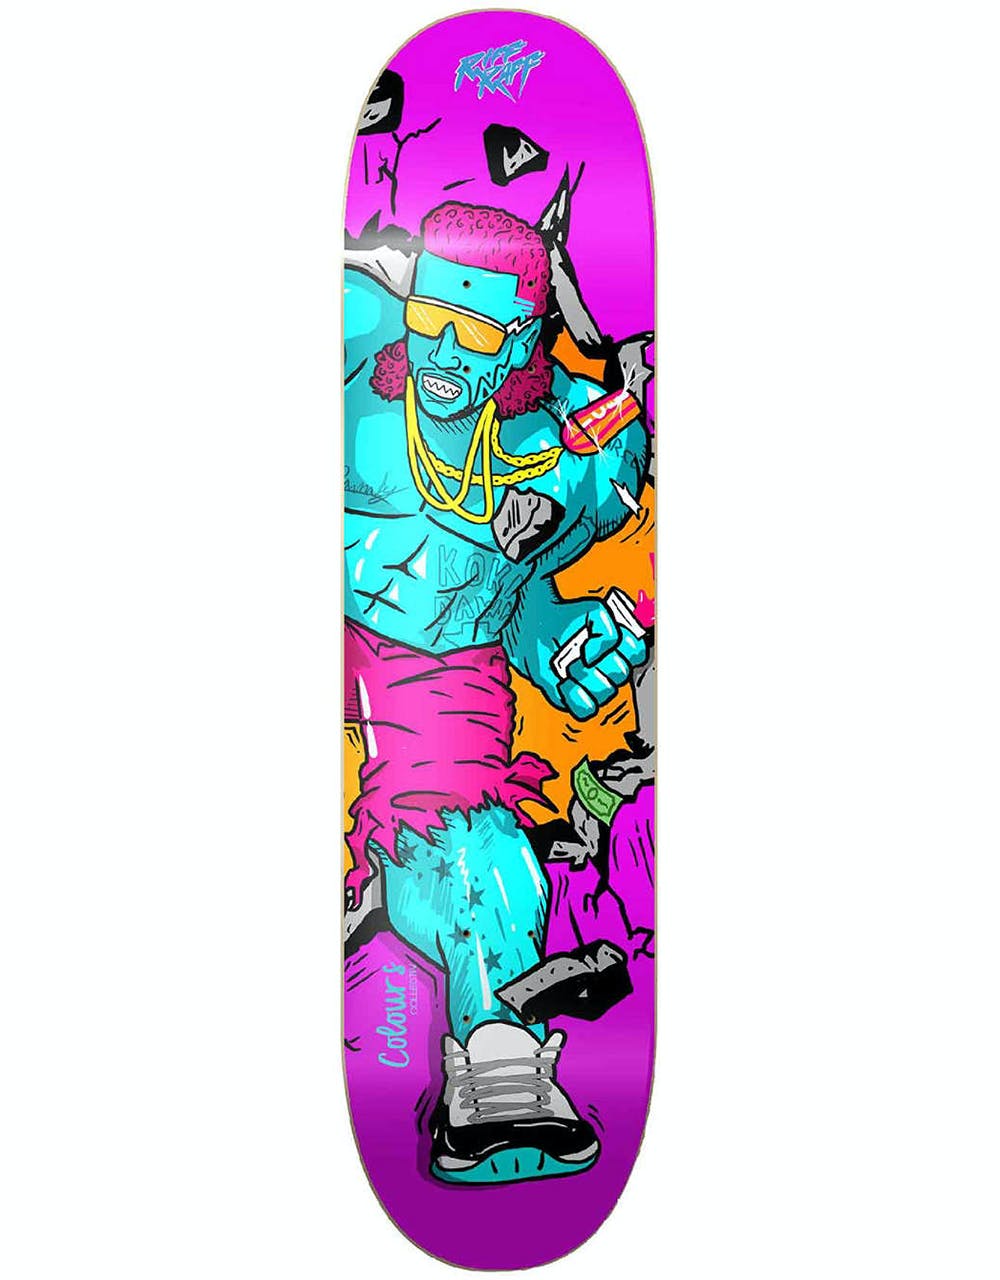 Colours Collectiv Incredible Riff Raff Skateboard Deck - 8.3"